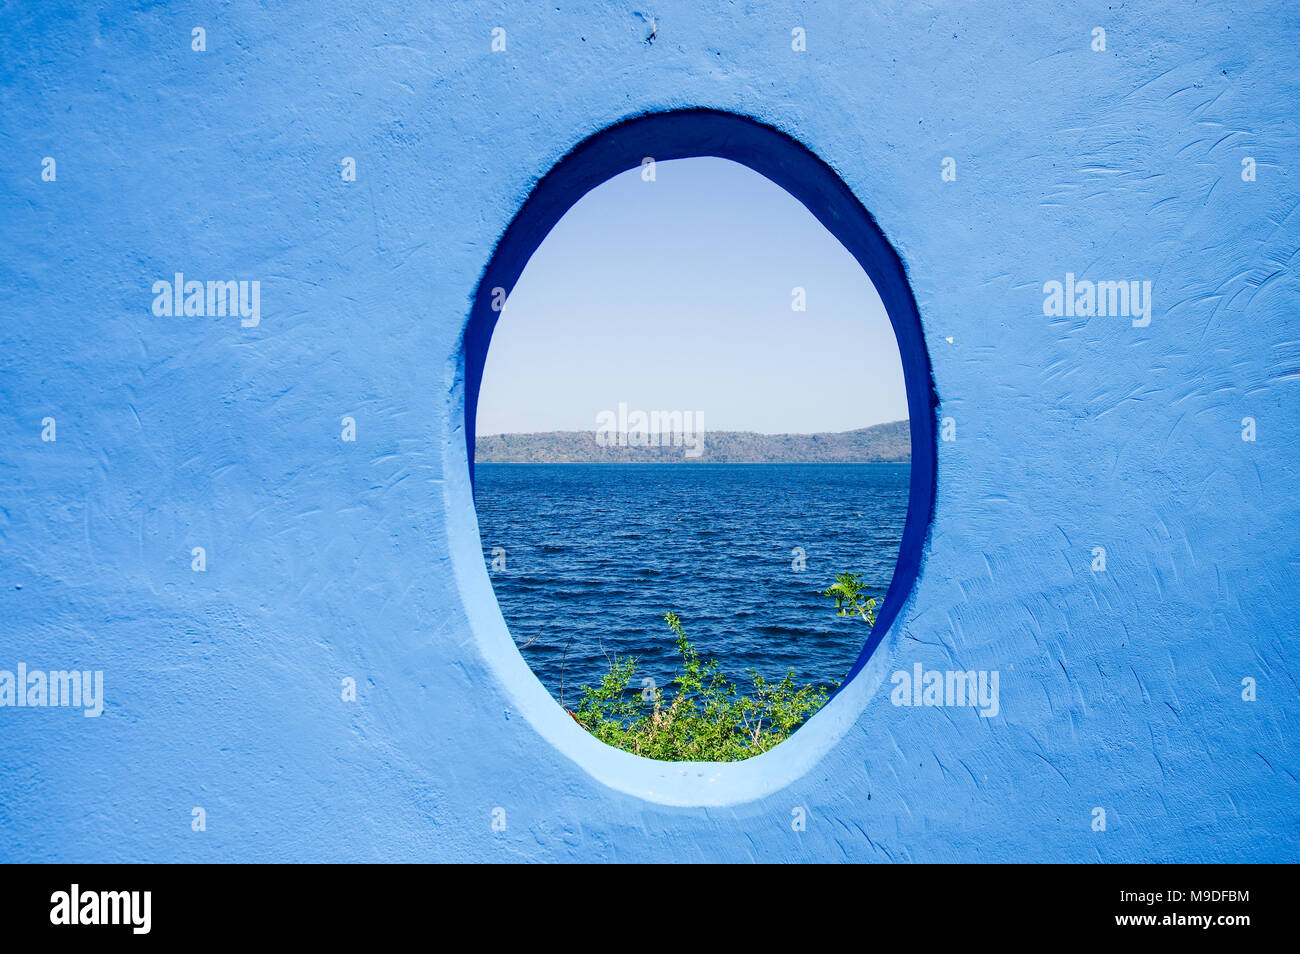 Rustic blue window overlooking Laguna de Apoyo lake in Nicaragua, Central America Stock Photo